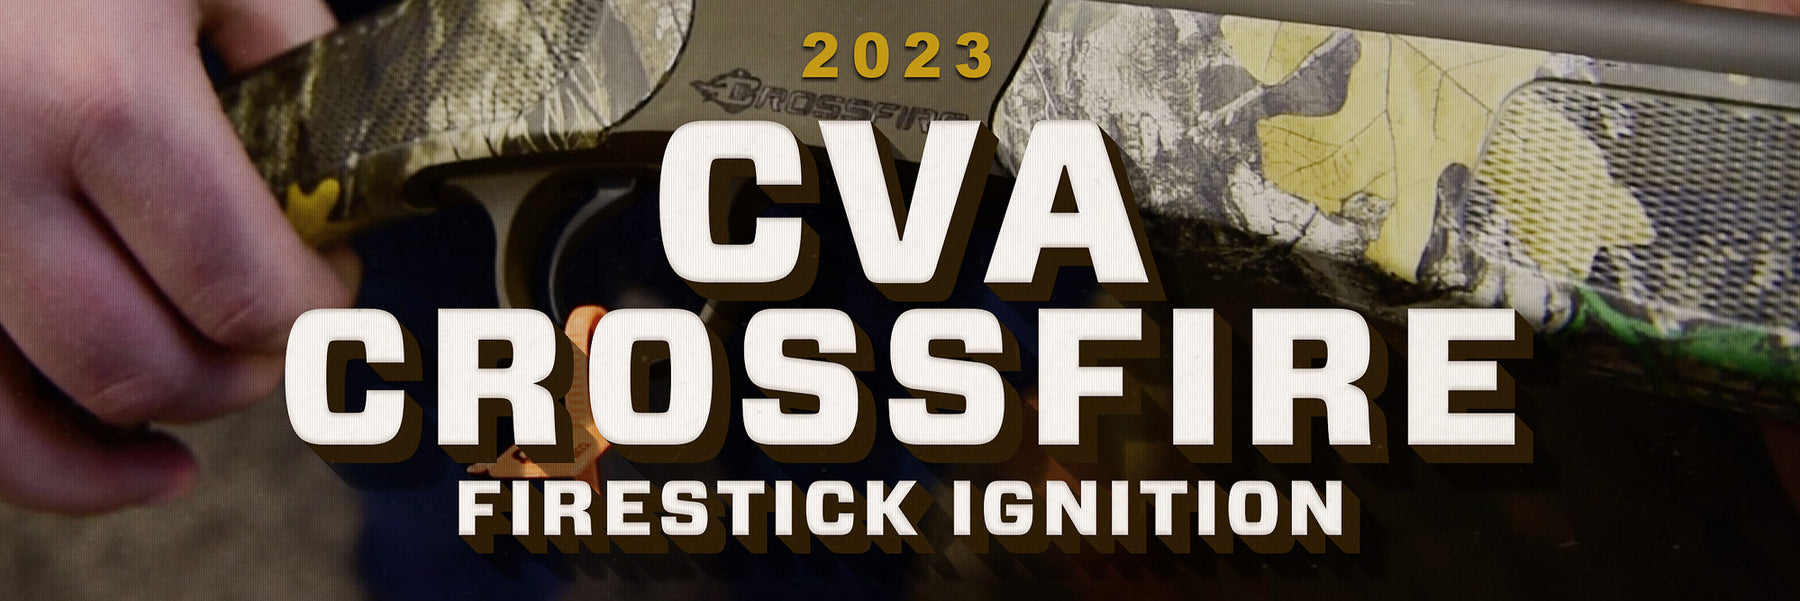 CVA Crossfire Muzzleloader Release FireStick Compatible